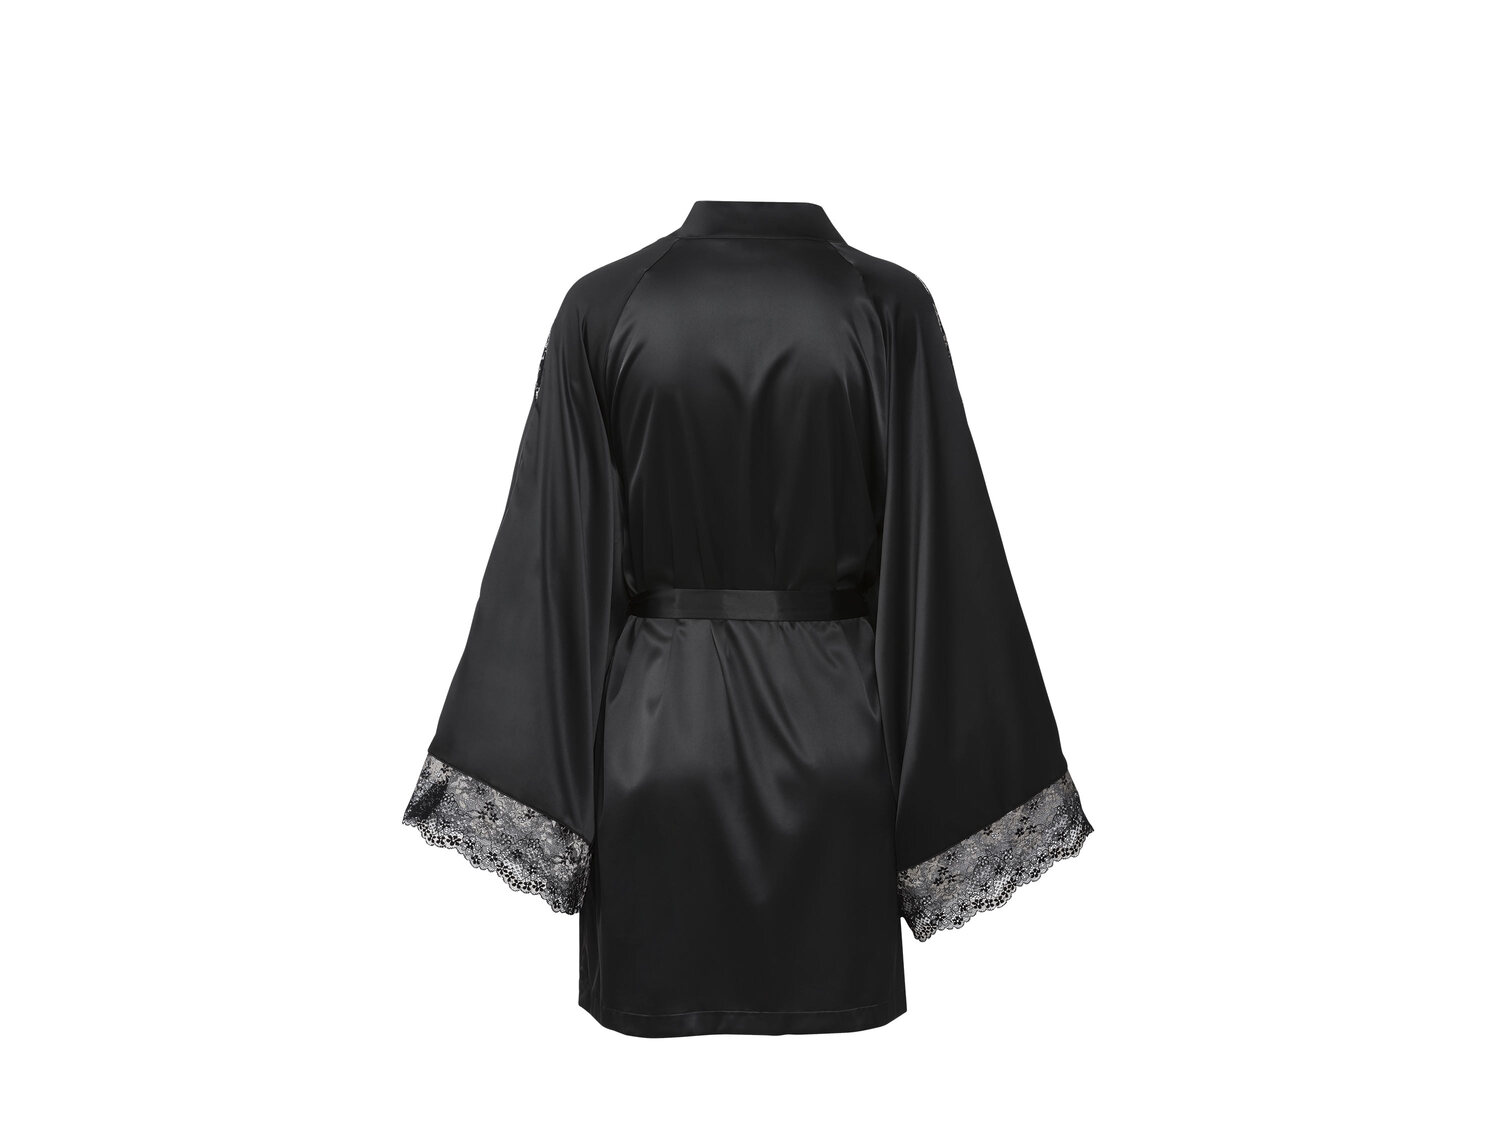 Kimono Esmara Lingerie, cena 49,99 PLN 
- rozmiary: S-L
Dostępne rozmiary

Opis

- ...